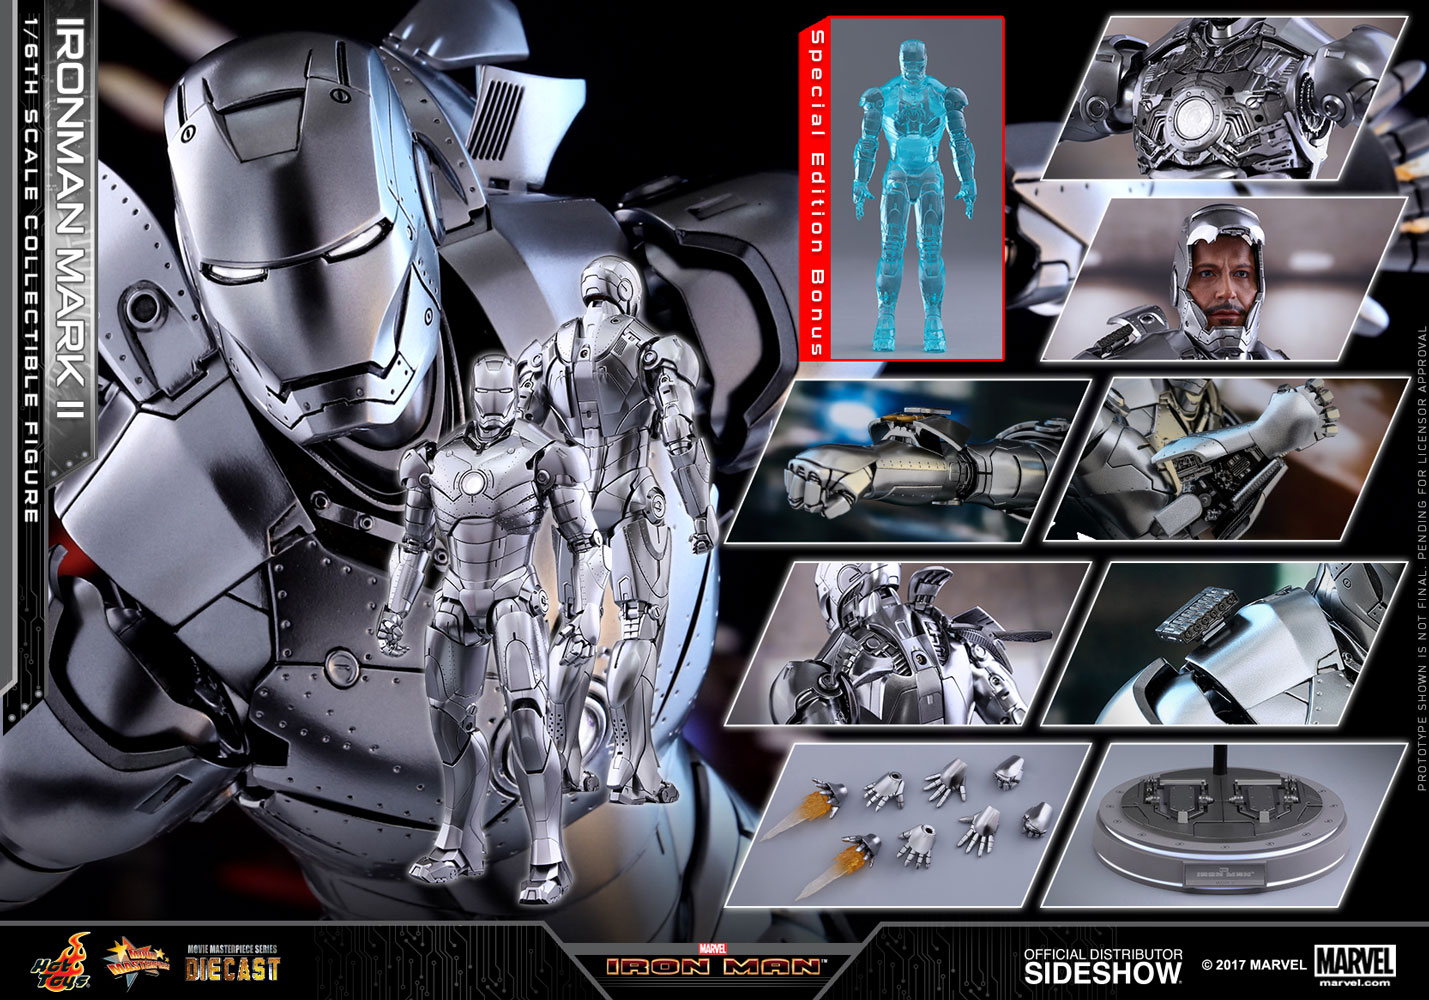 Iron Man Mark II Exclusive Edition - Prototype Shown